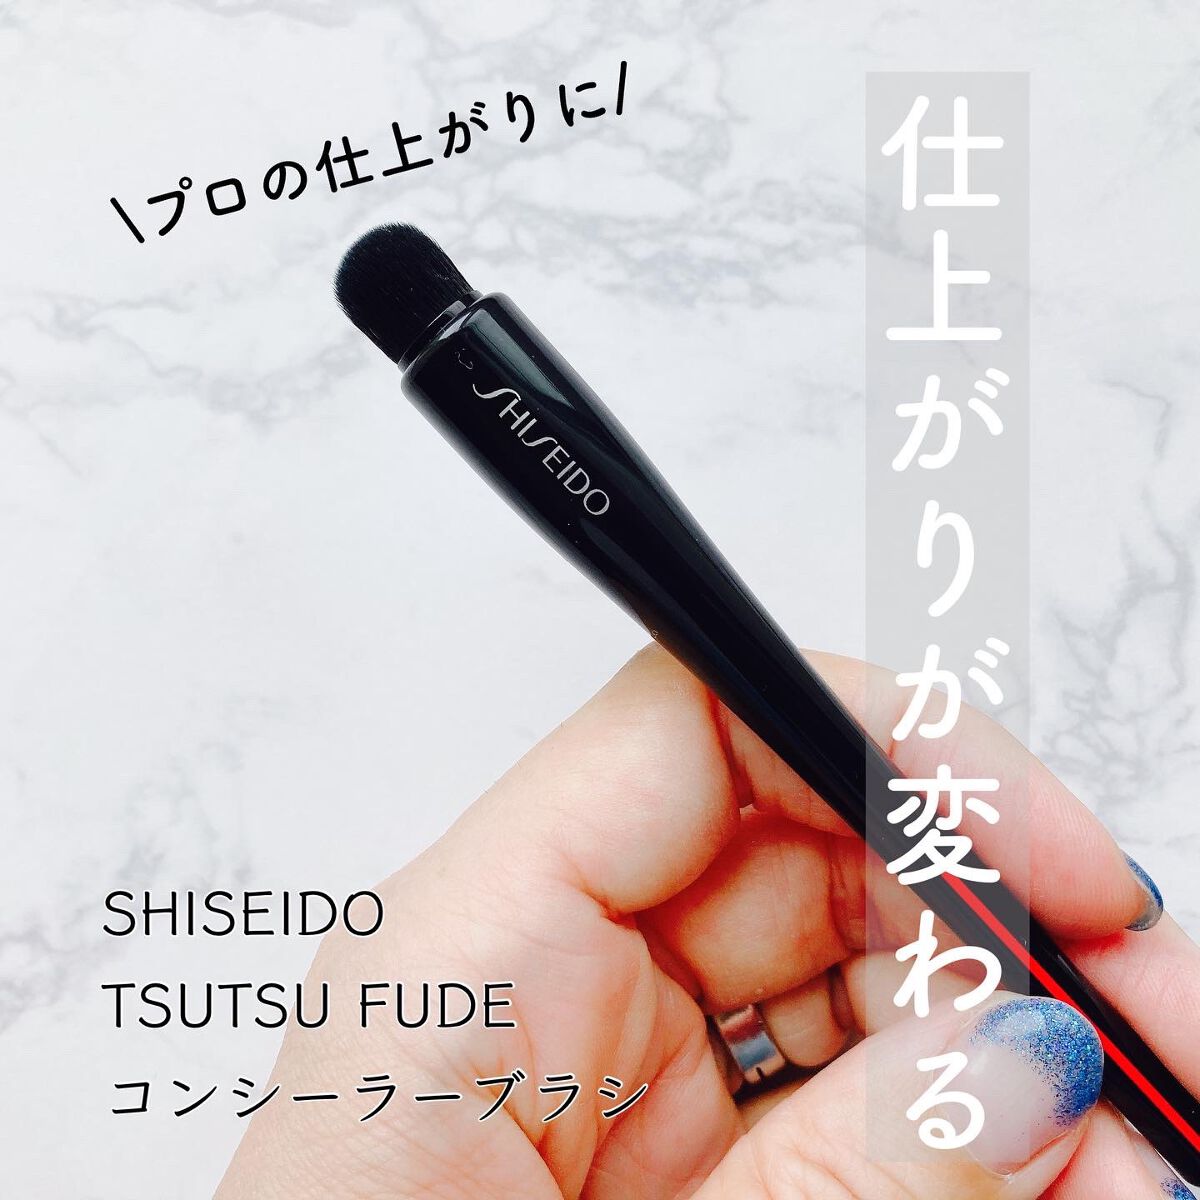 1.TSUTSU FUDE コンシーラーブラシSHISEIDO(シセイドウ) - メイク道具